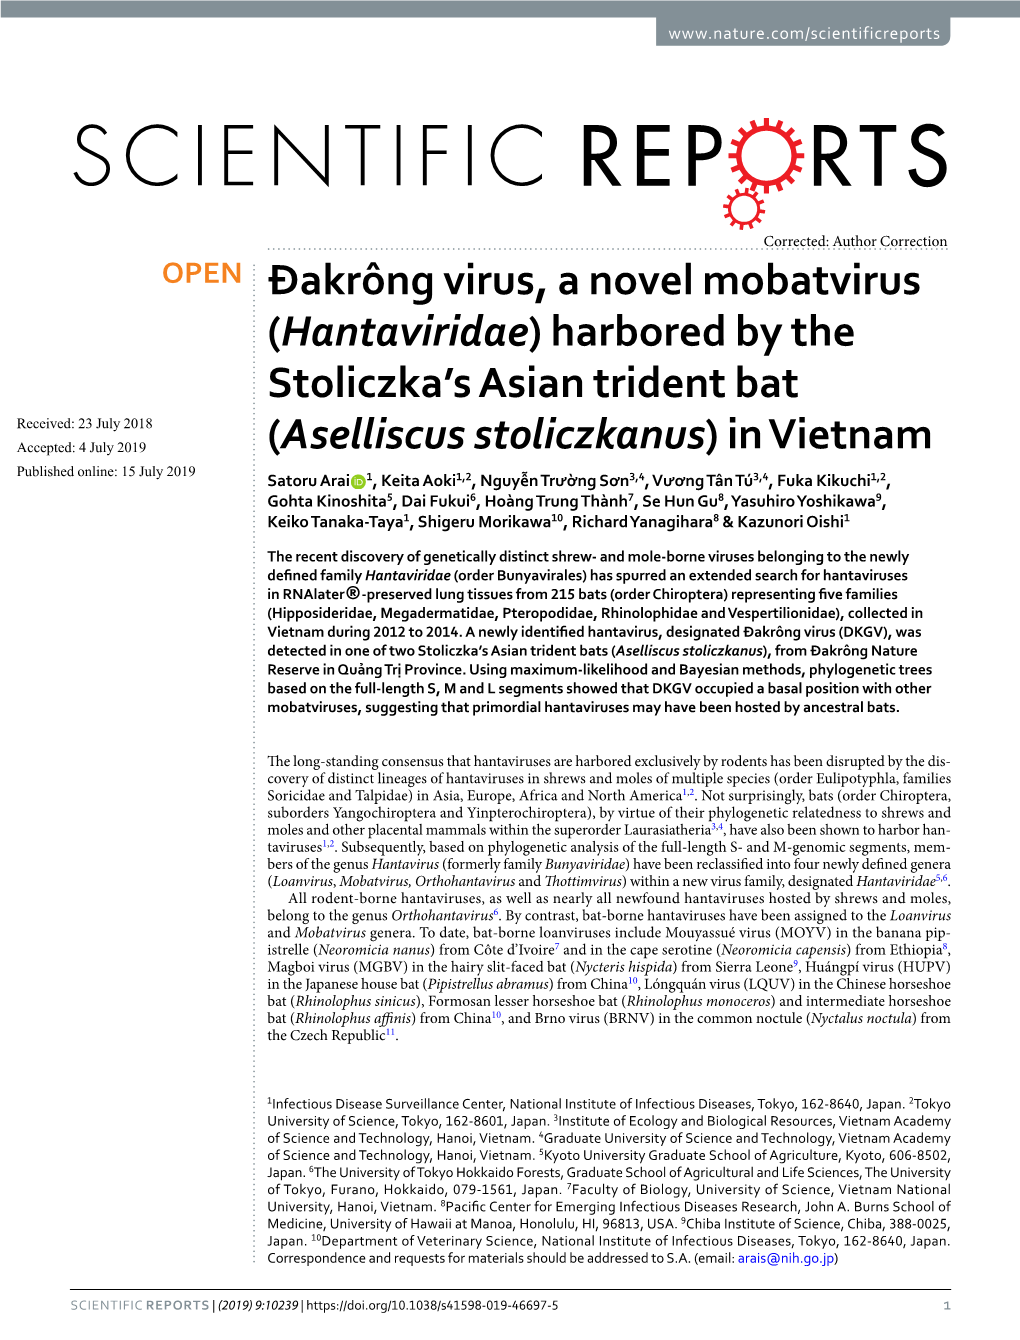 Đakrông Virus, a Novel Mobatvirus (Hantaviridae) Harbored by the Stoliczka's Asian Trident Bat (Aselliscus Stoliczkanus) In